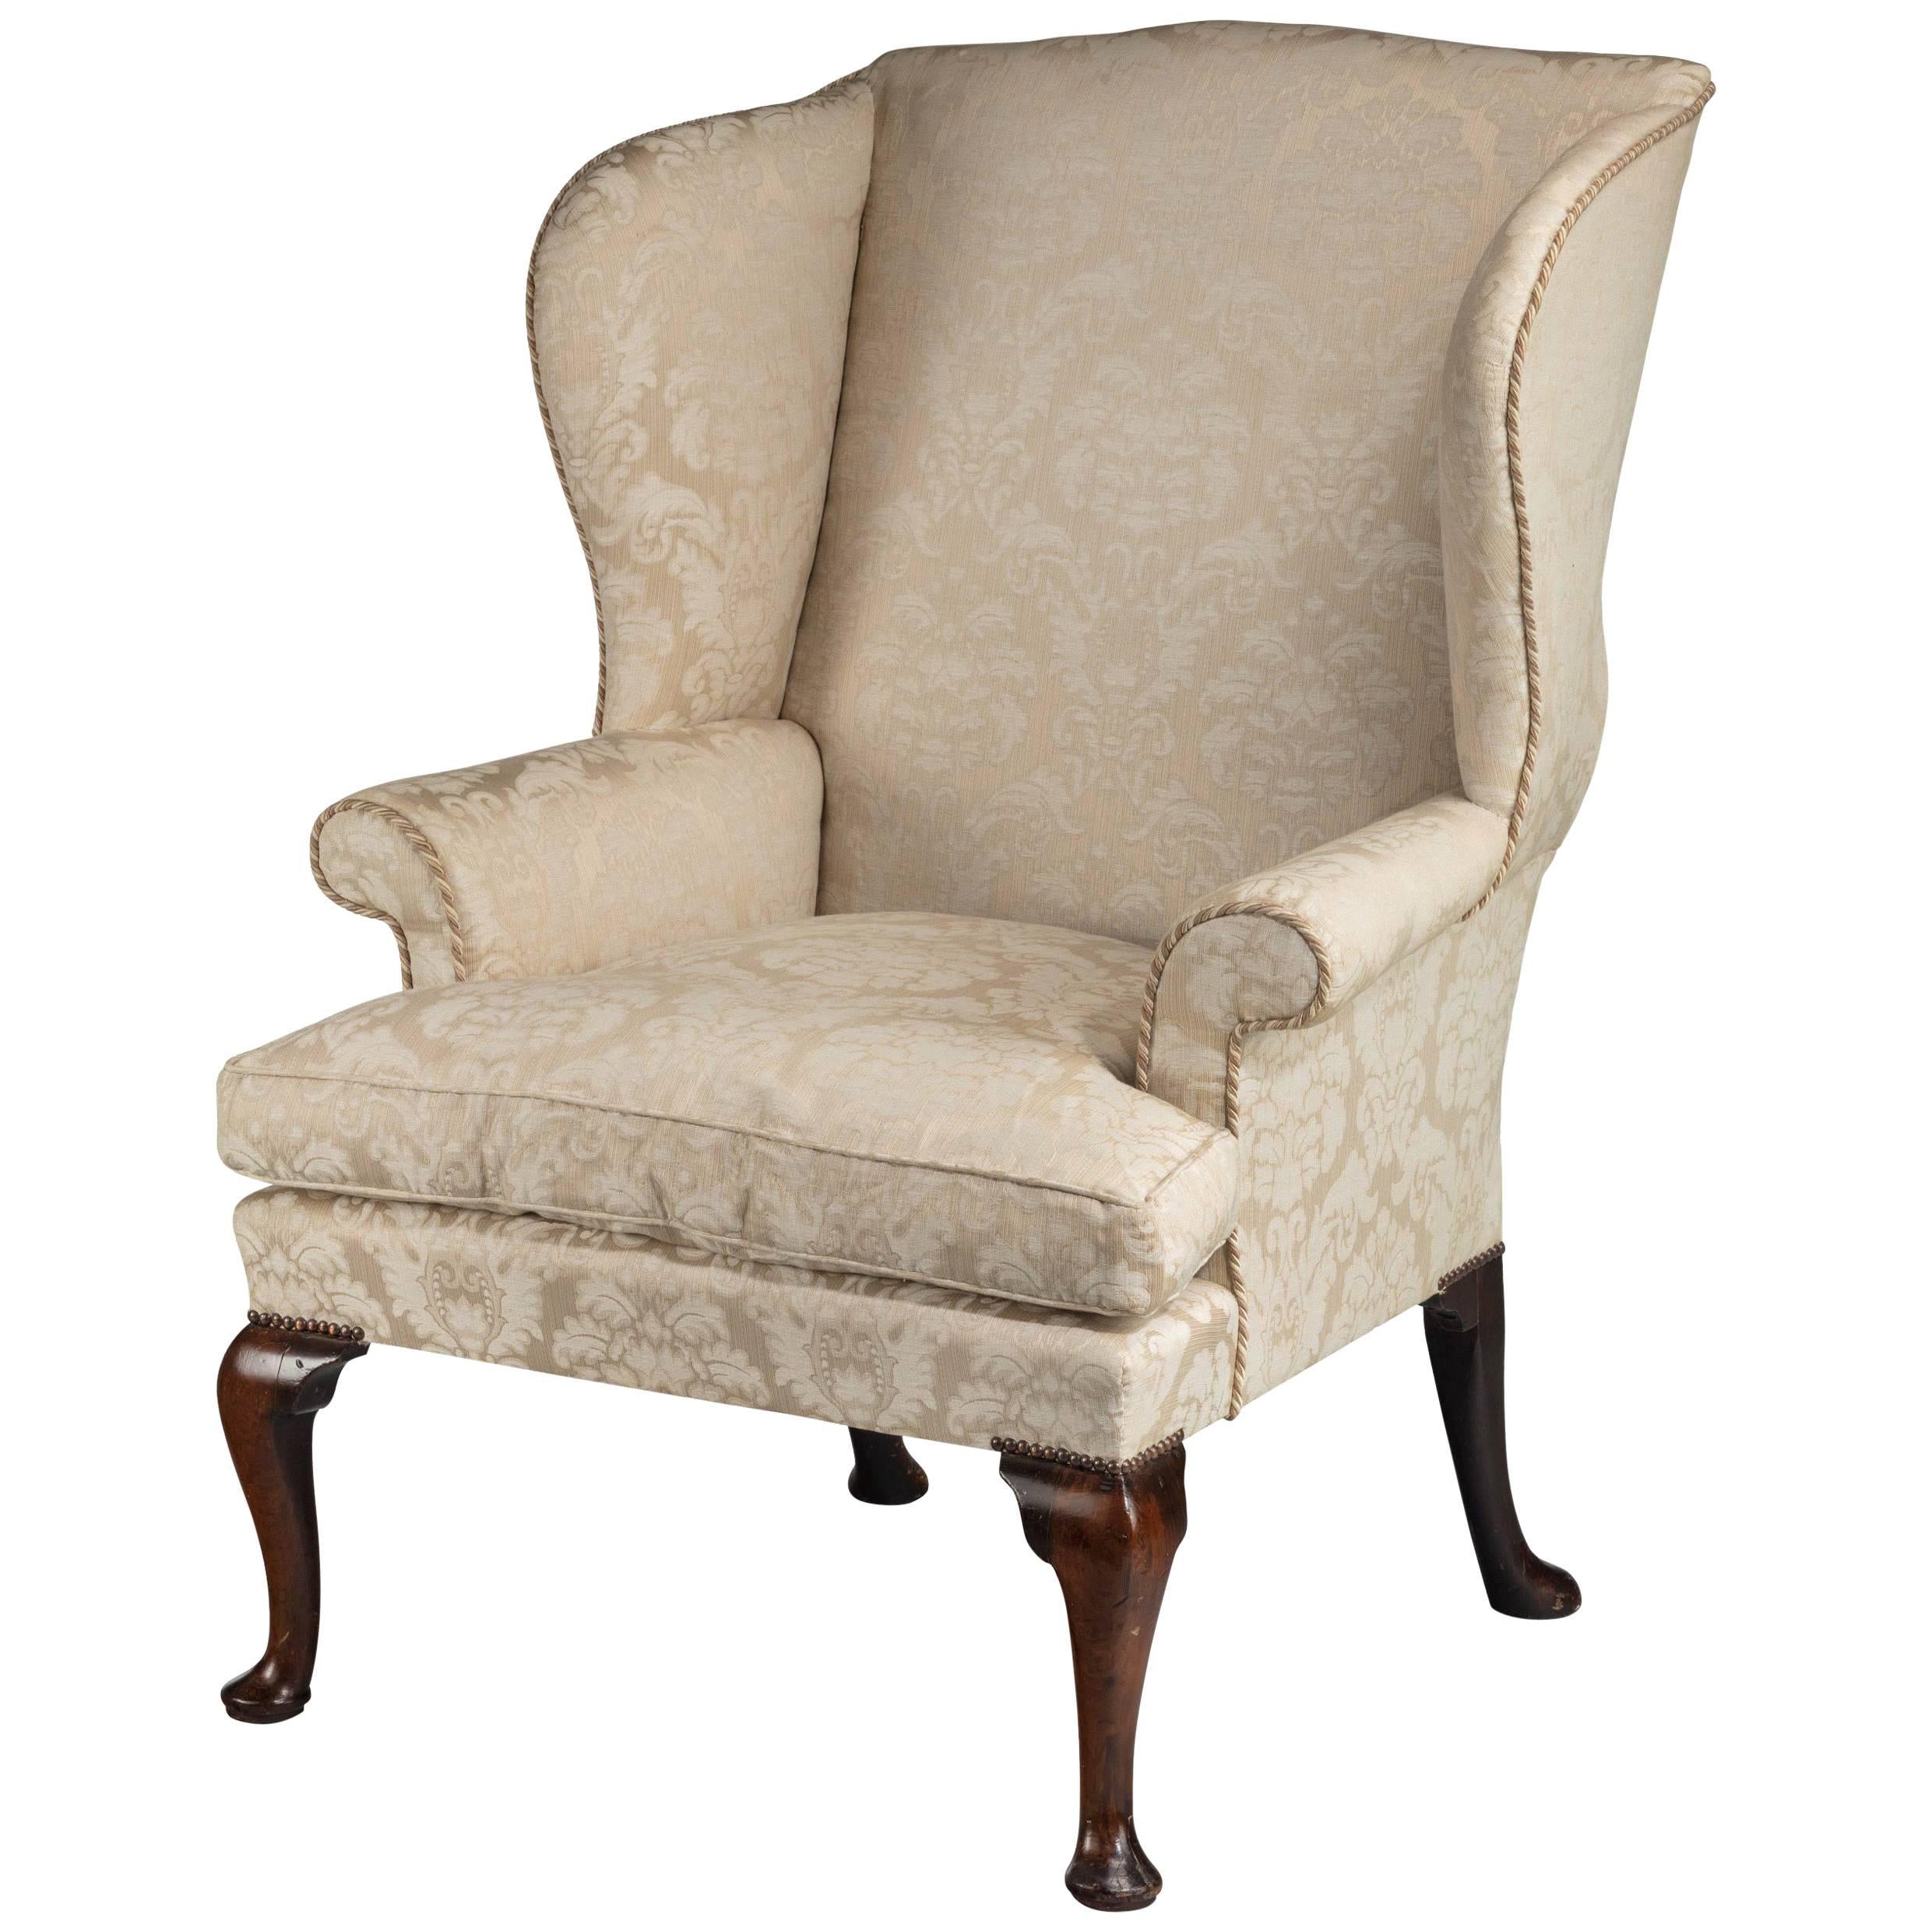 George II Period Walnut Framed Wing Chair